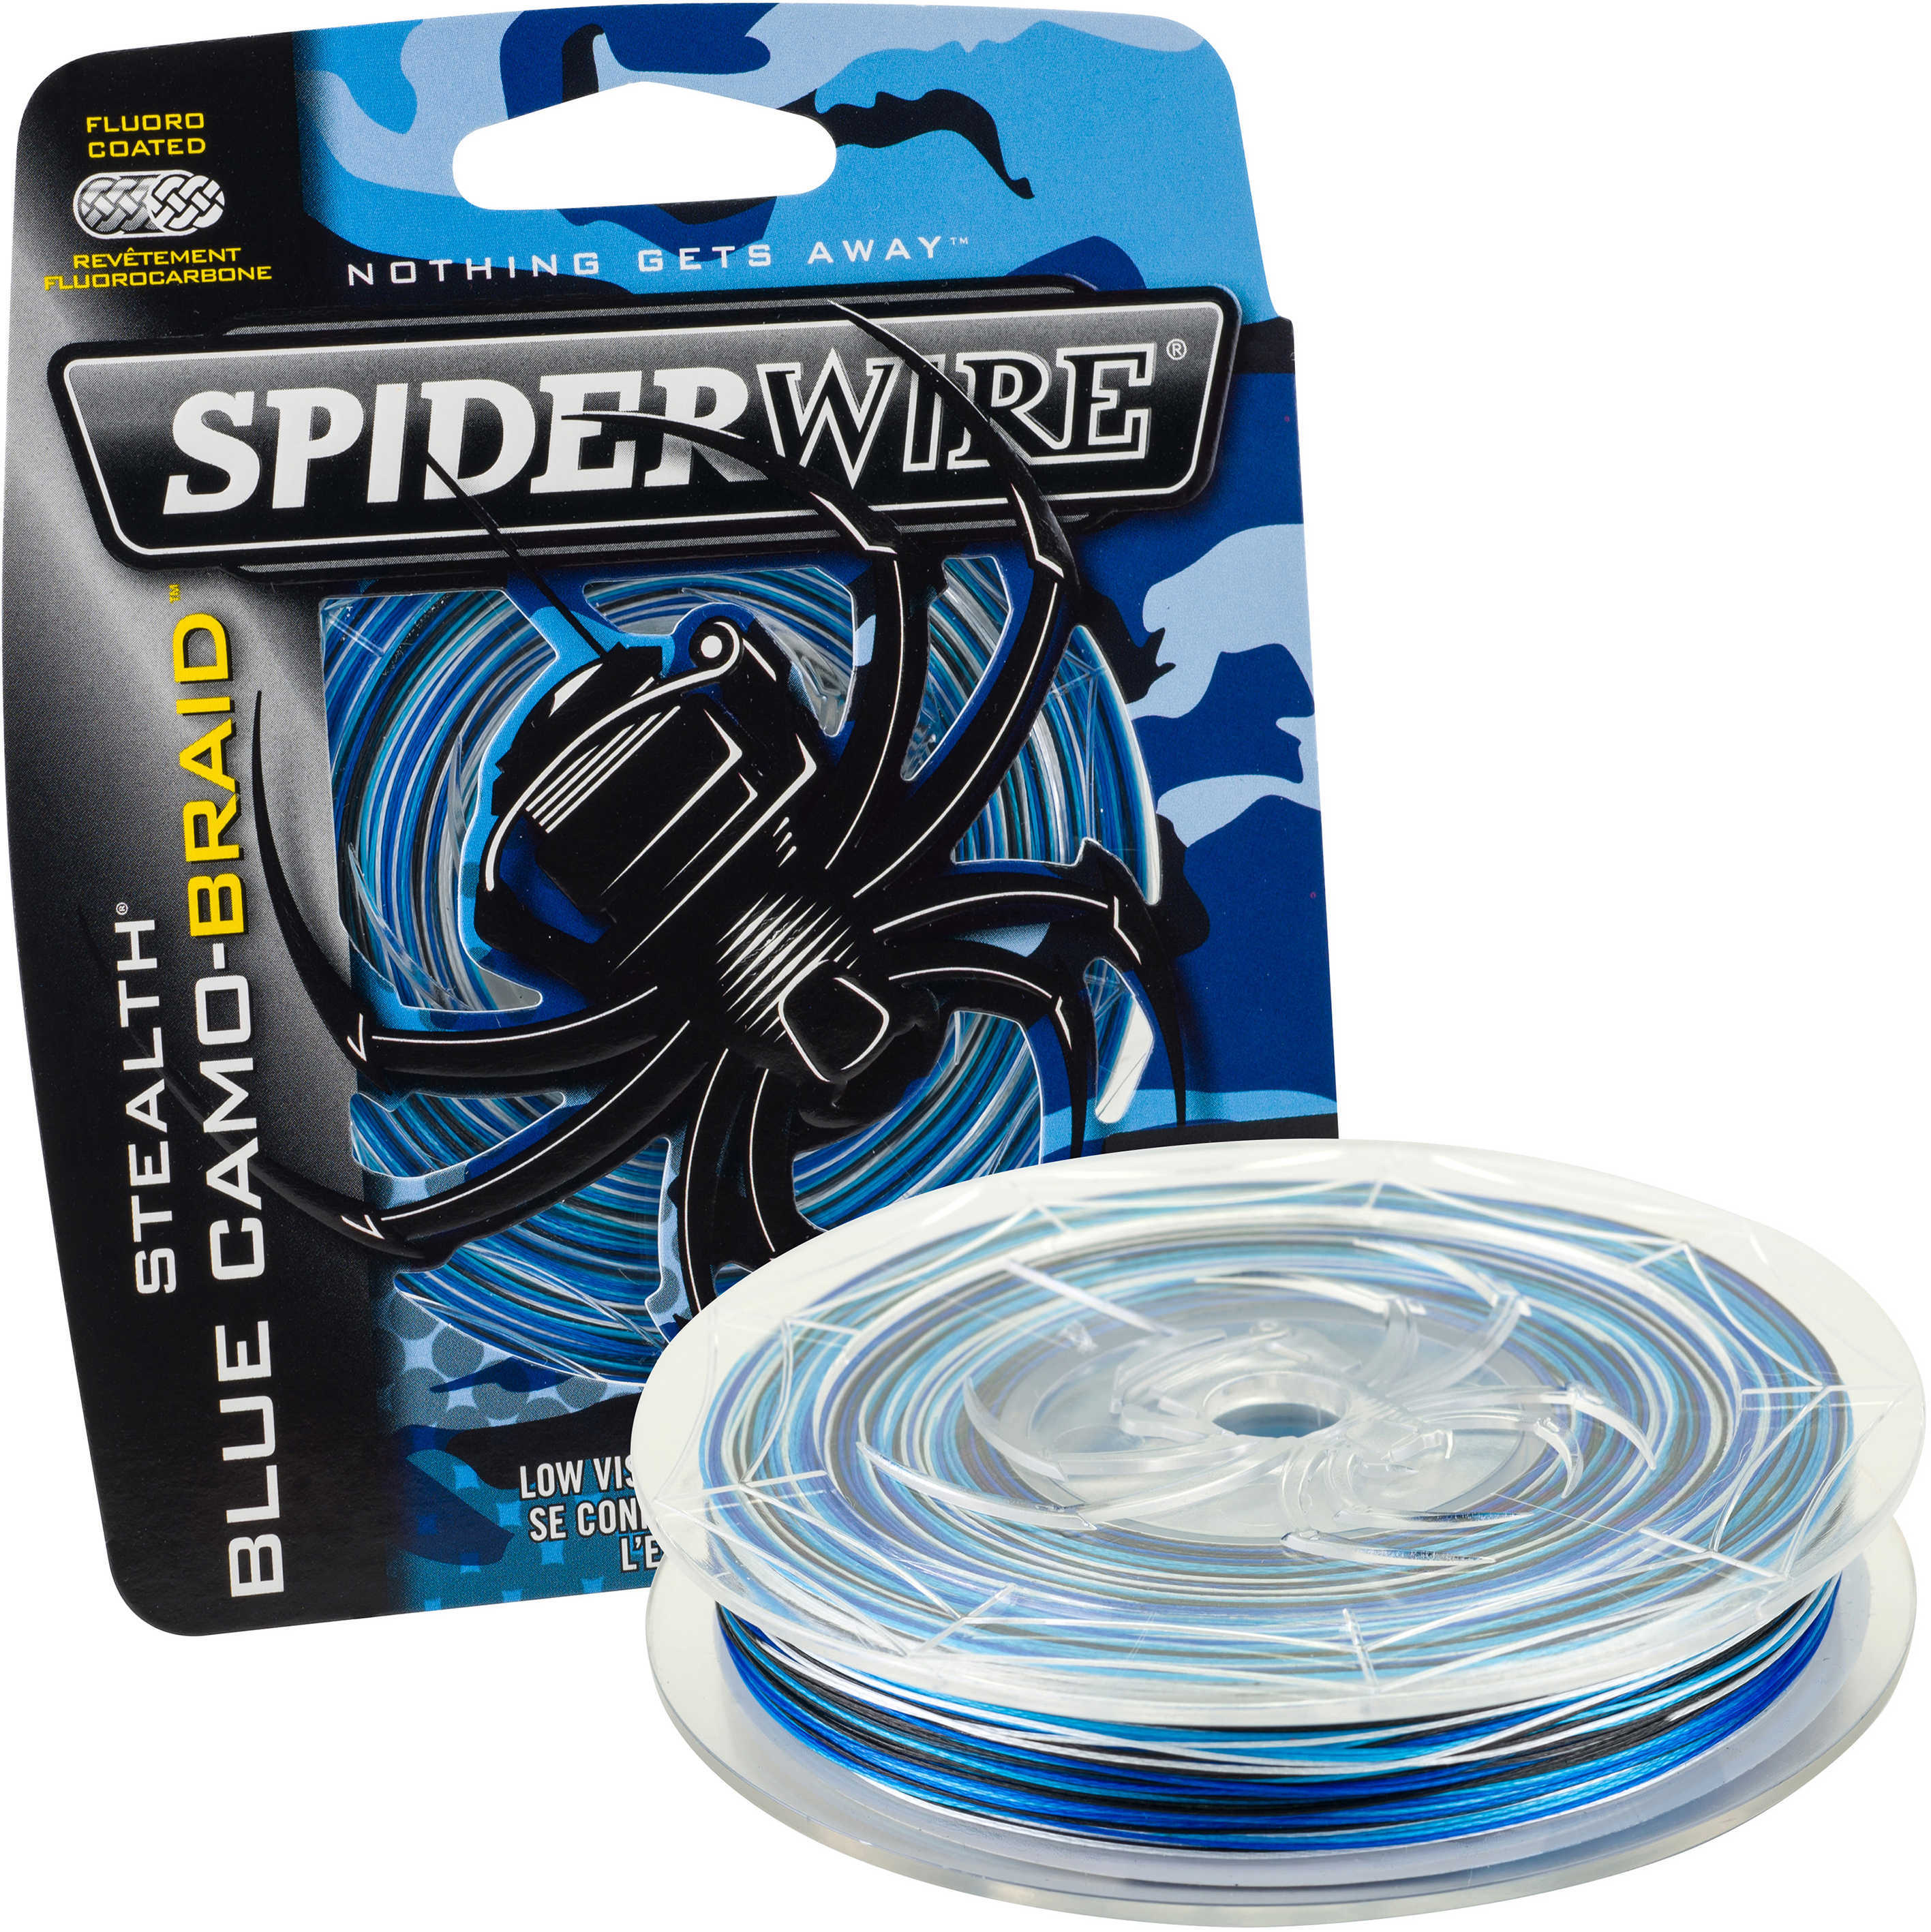 Spiderwire Stealth Braid 200 Yards , 80 lbs Strength, 0.016" Diameter, Blue Camo Md: 1374138